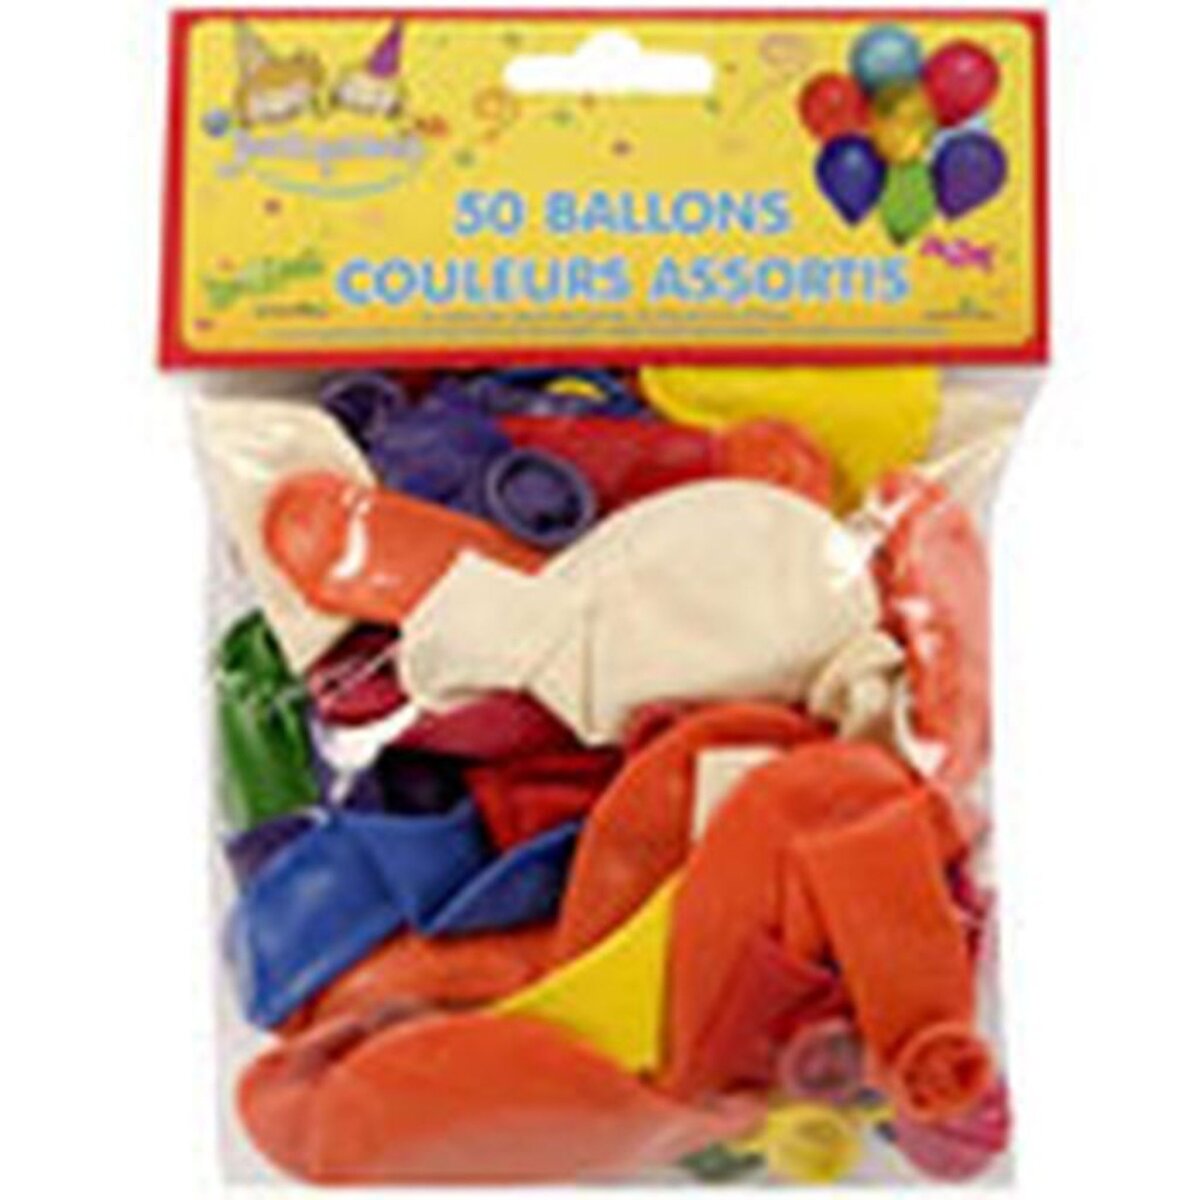 DYNASTRIB Dynastrib Ballons gonflables coloris assortis x50 50 pièces